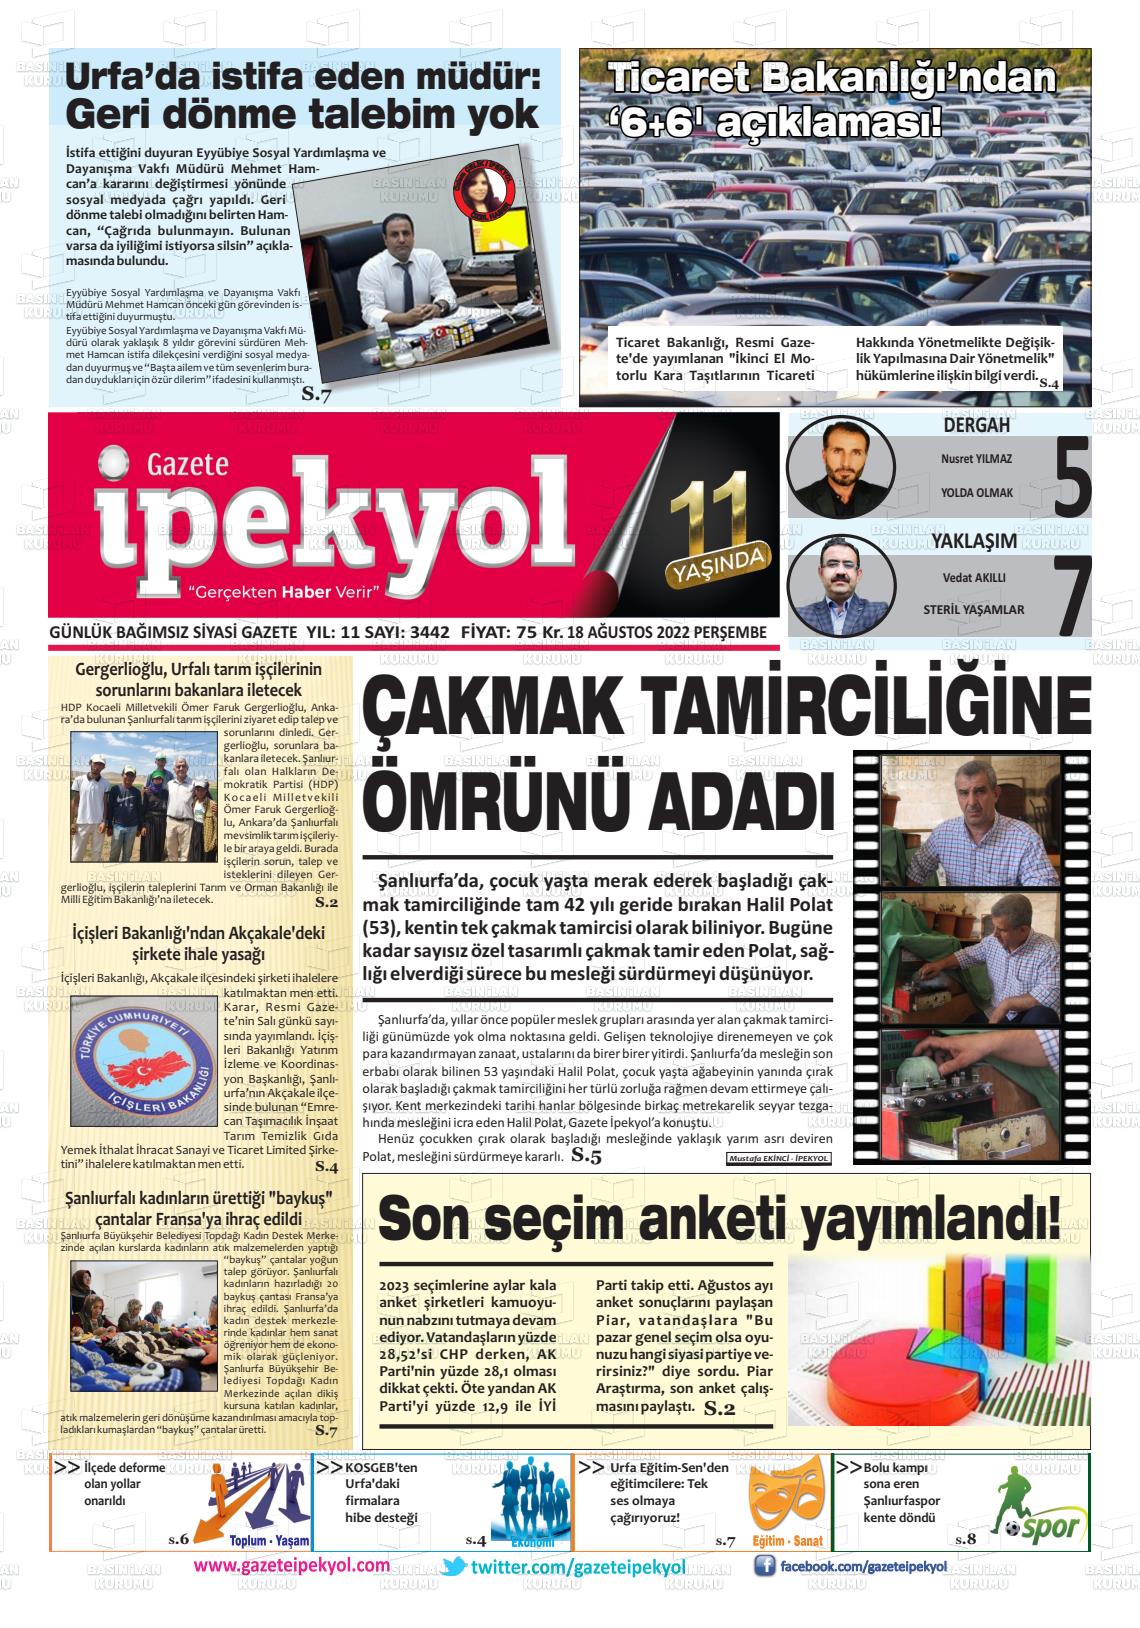 18 Ağustos 2022 Gazete İpekyol Gazete Manşeti